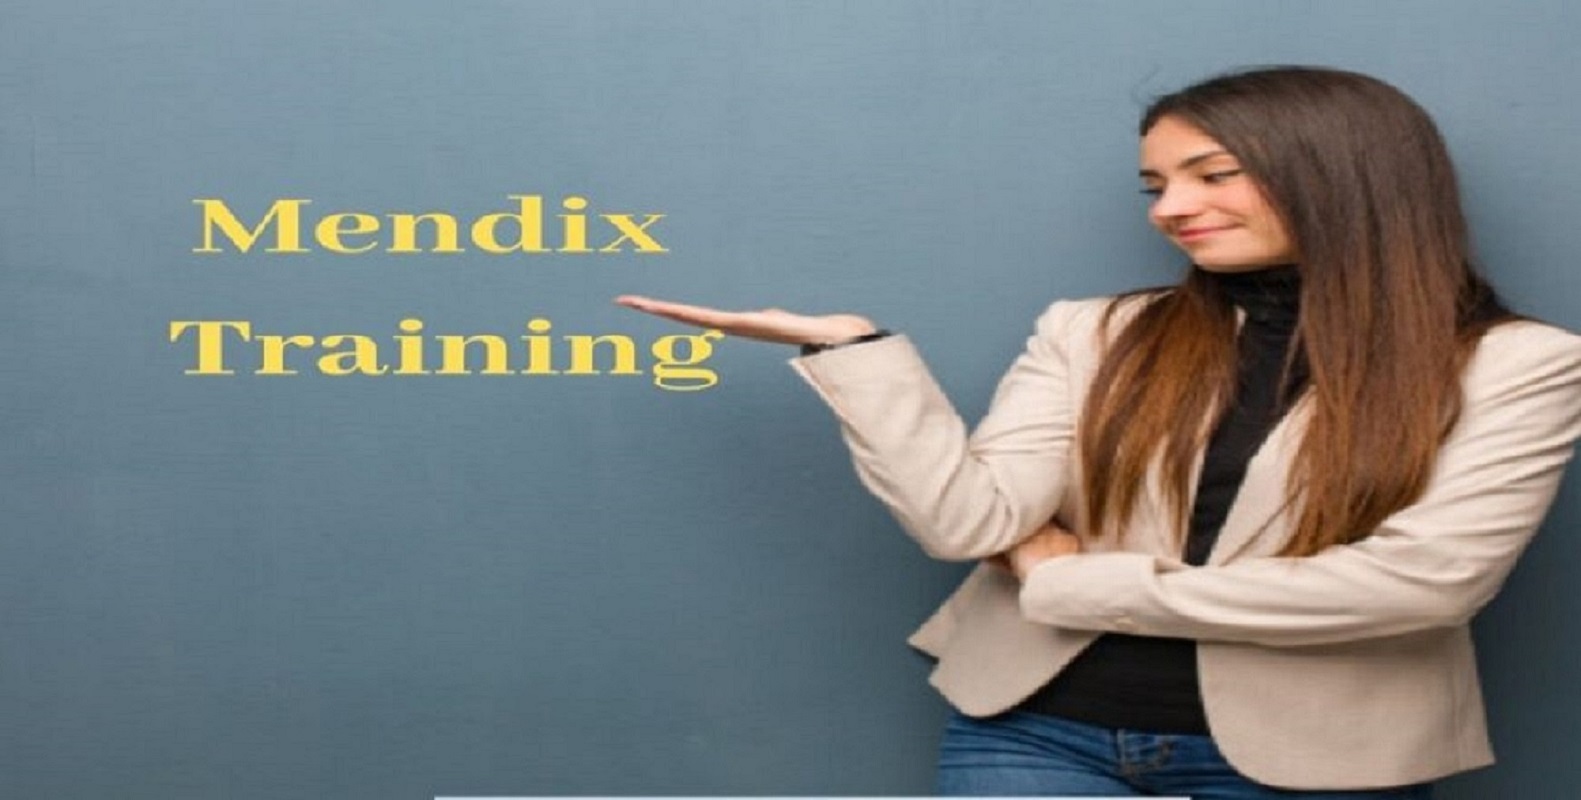 Mendix Training | Mendix Online Training – ARIT Technologies, Hyderabad, Telangana, India